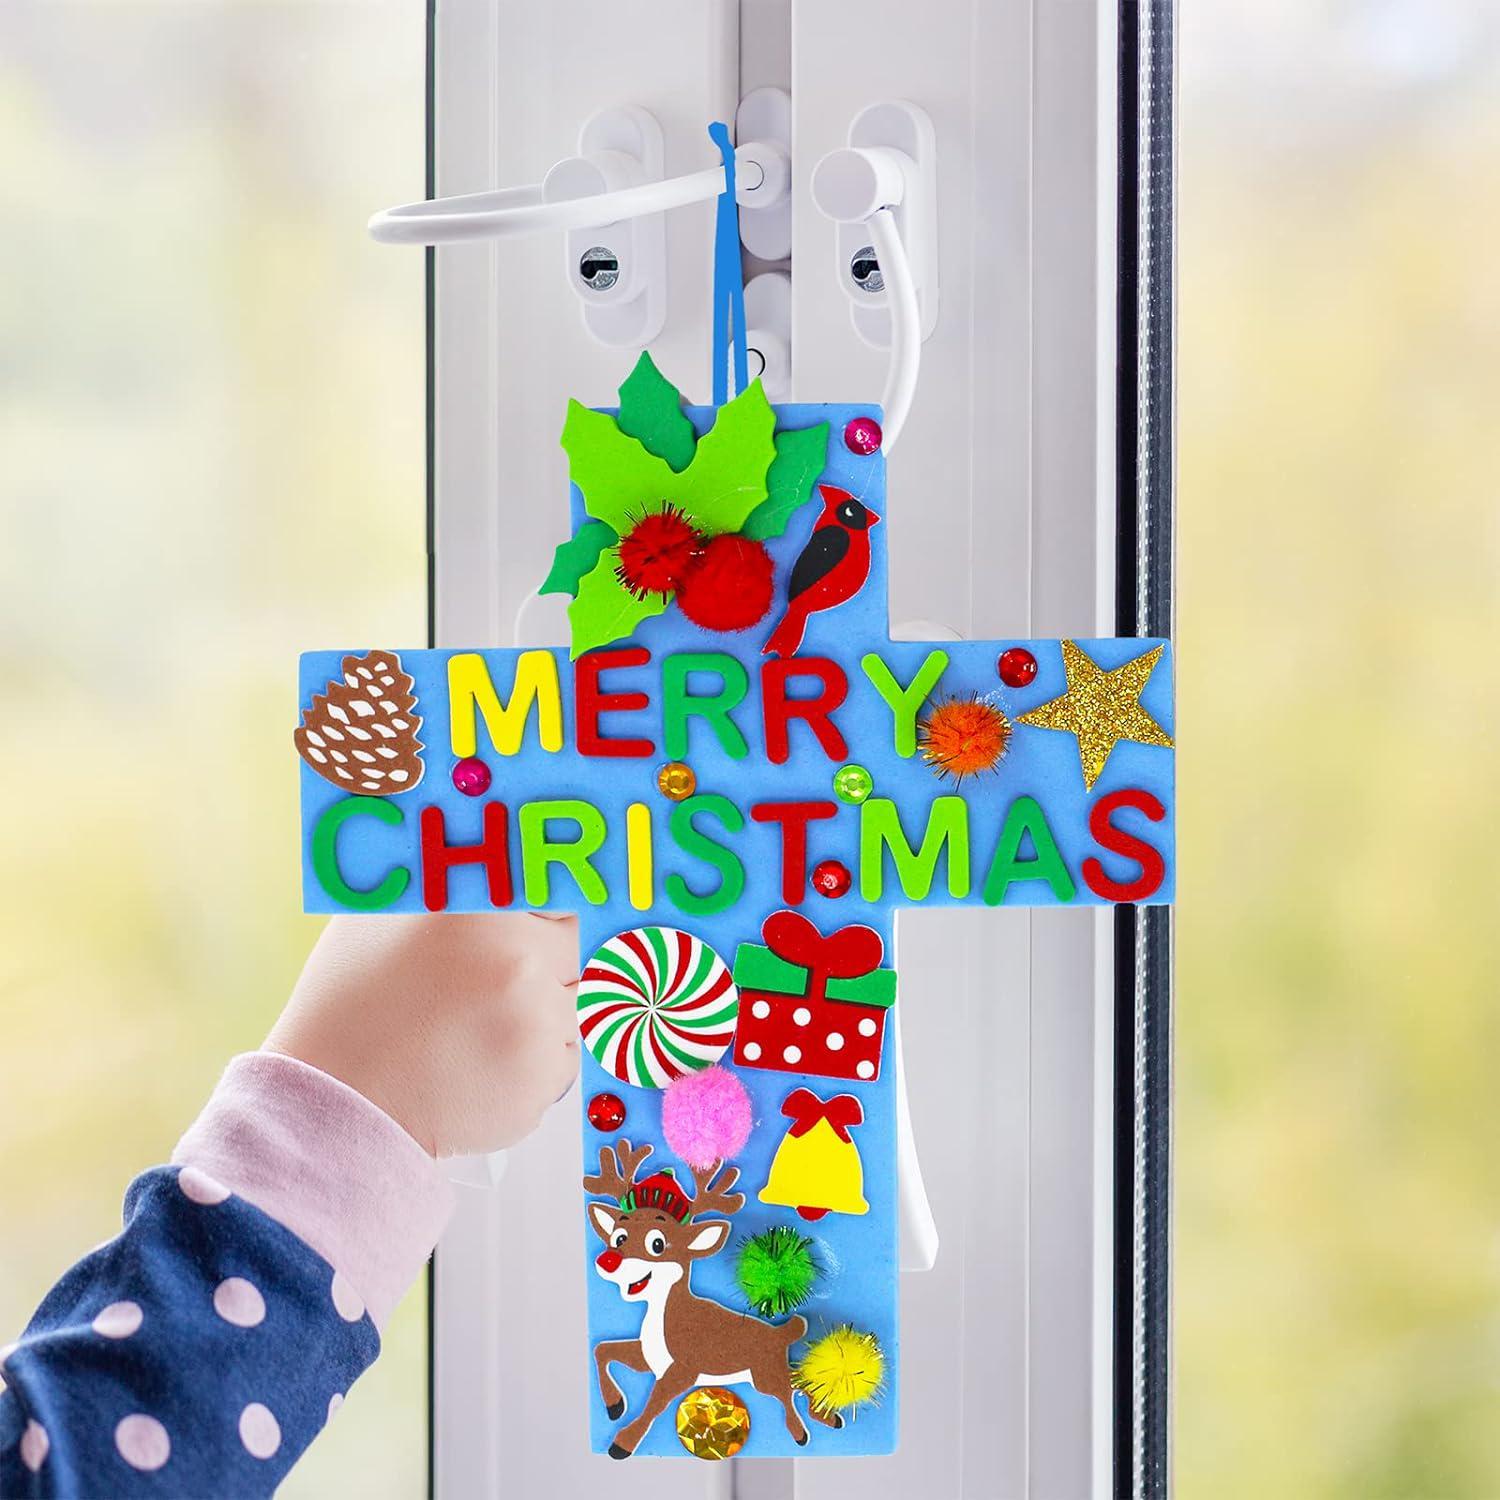 16pcs/24pcs/48pcs/80pcs Jingle Bells, Colorful Jingle Bells for Crafts  Small Christmas Jingle Bells Metal Craft Bells for DIY Crafts Wreath Home  and Christmas Decoration